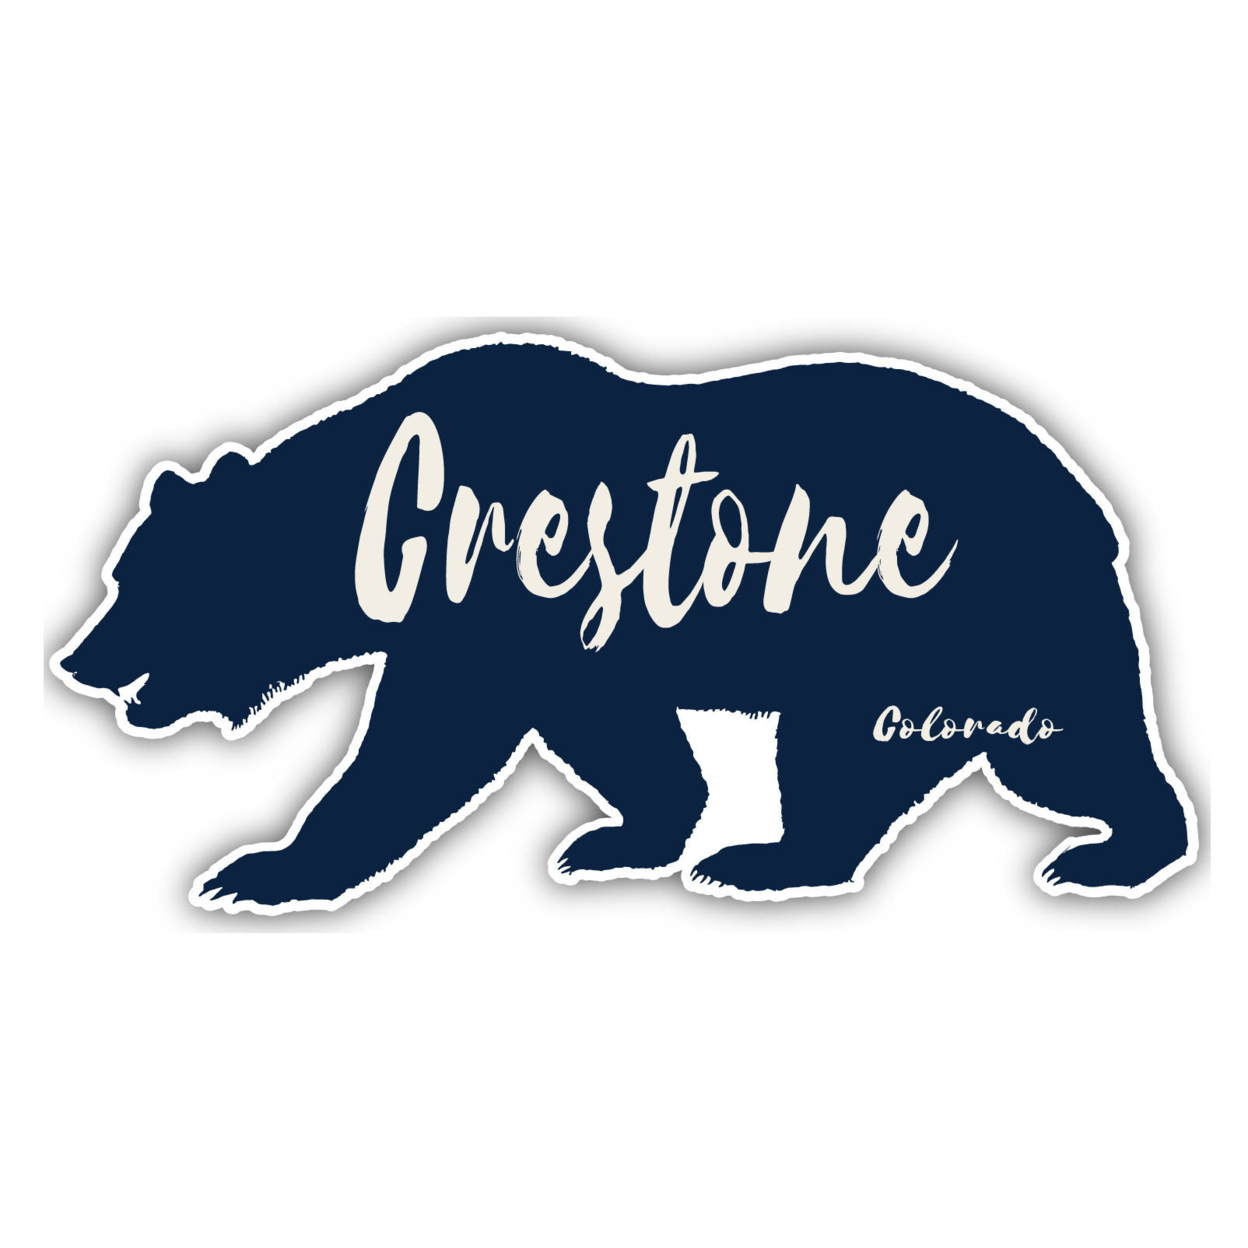 Crestone Colorado Souvenir Decorative Stickers (Choose Theme And Size) - 4-Pack, 12-Inch, Tent